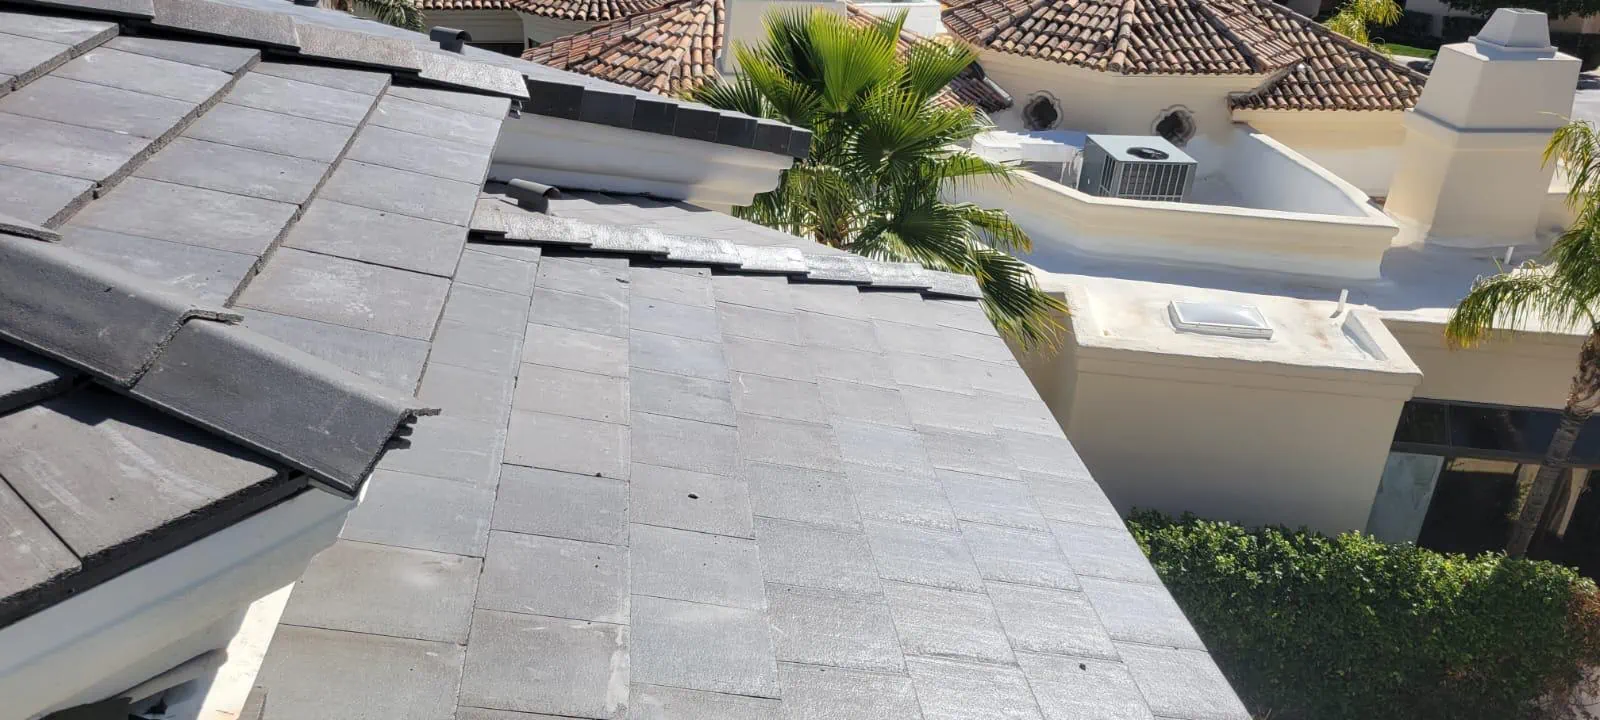 tile re roofing work in phoenix